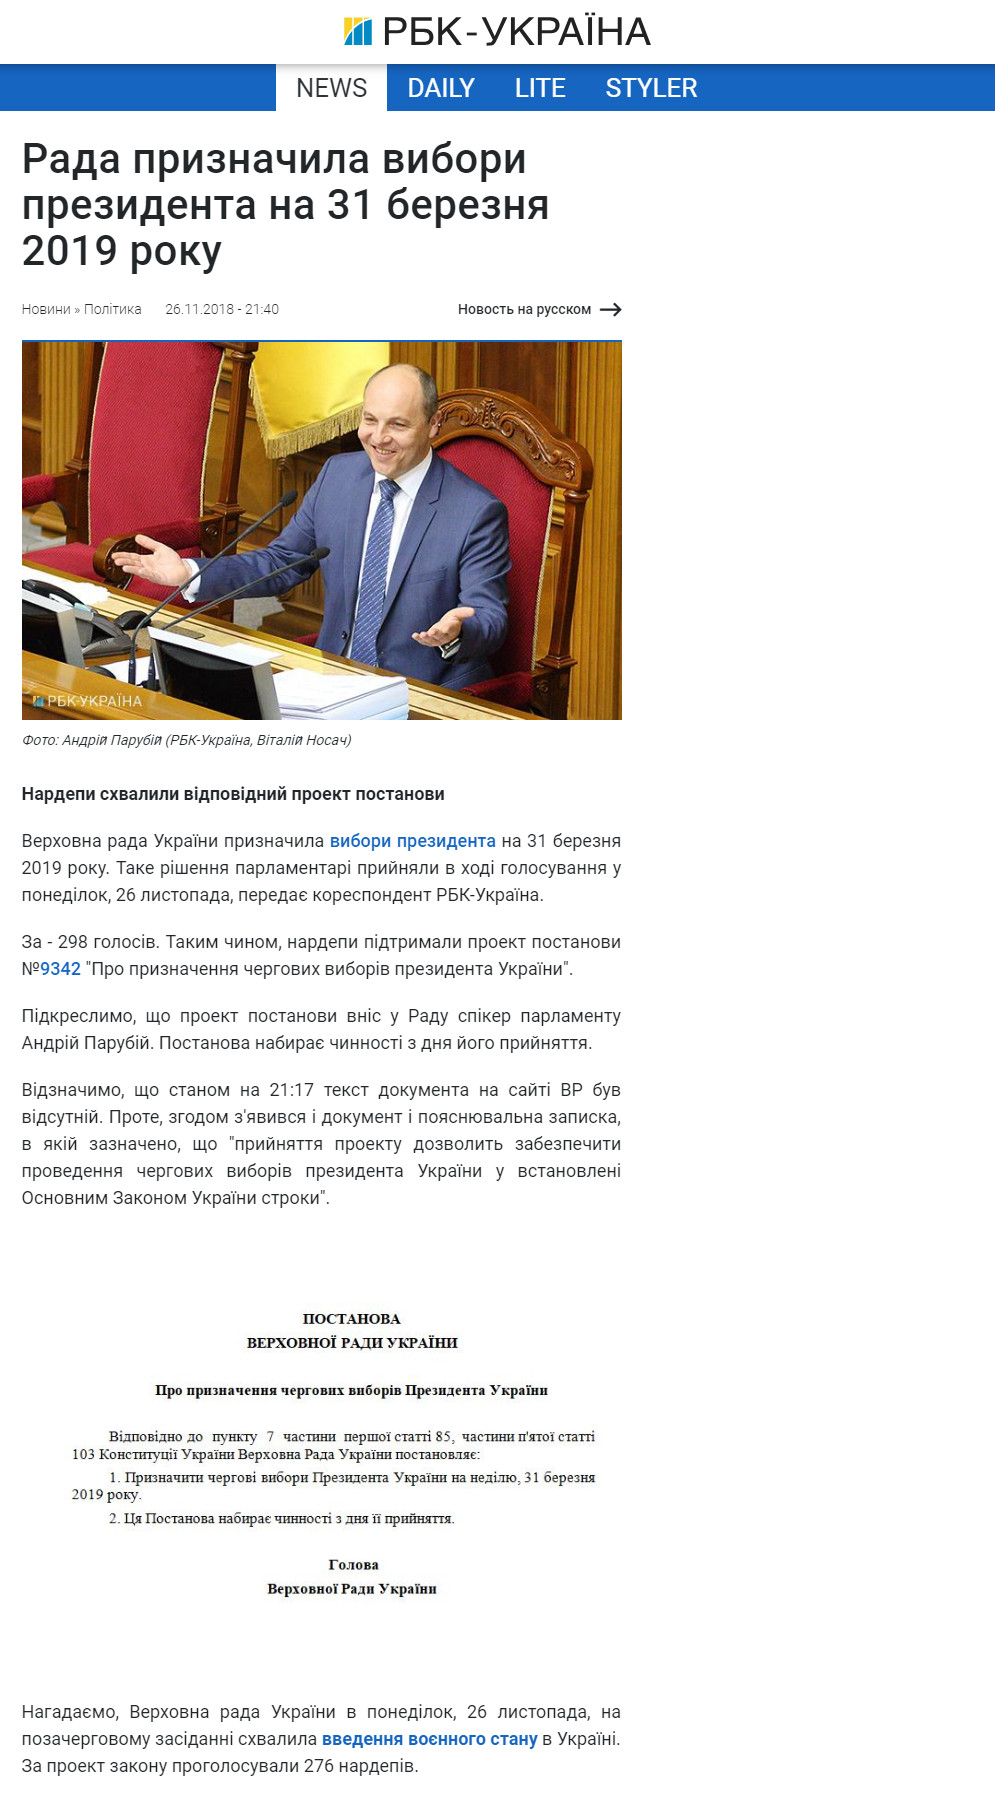 https://www.rbc.ua/ukr/news/rada-naznachila-vybory-prezidenta-31-marta-1543260303.html